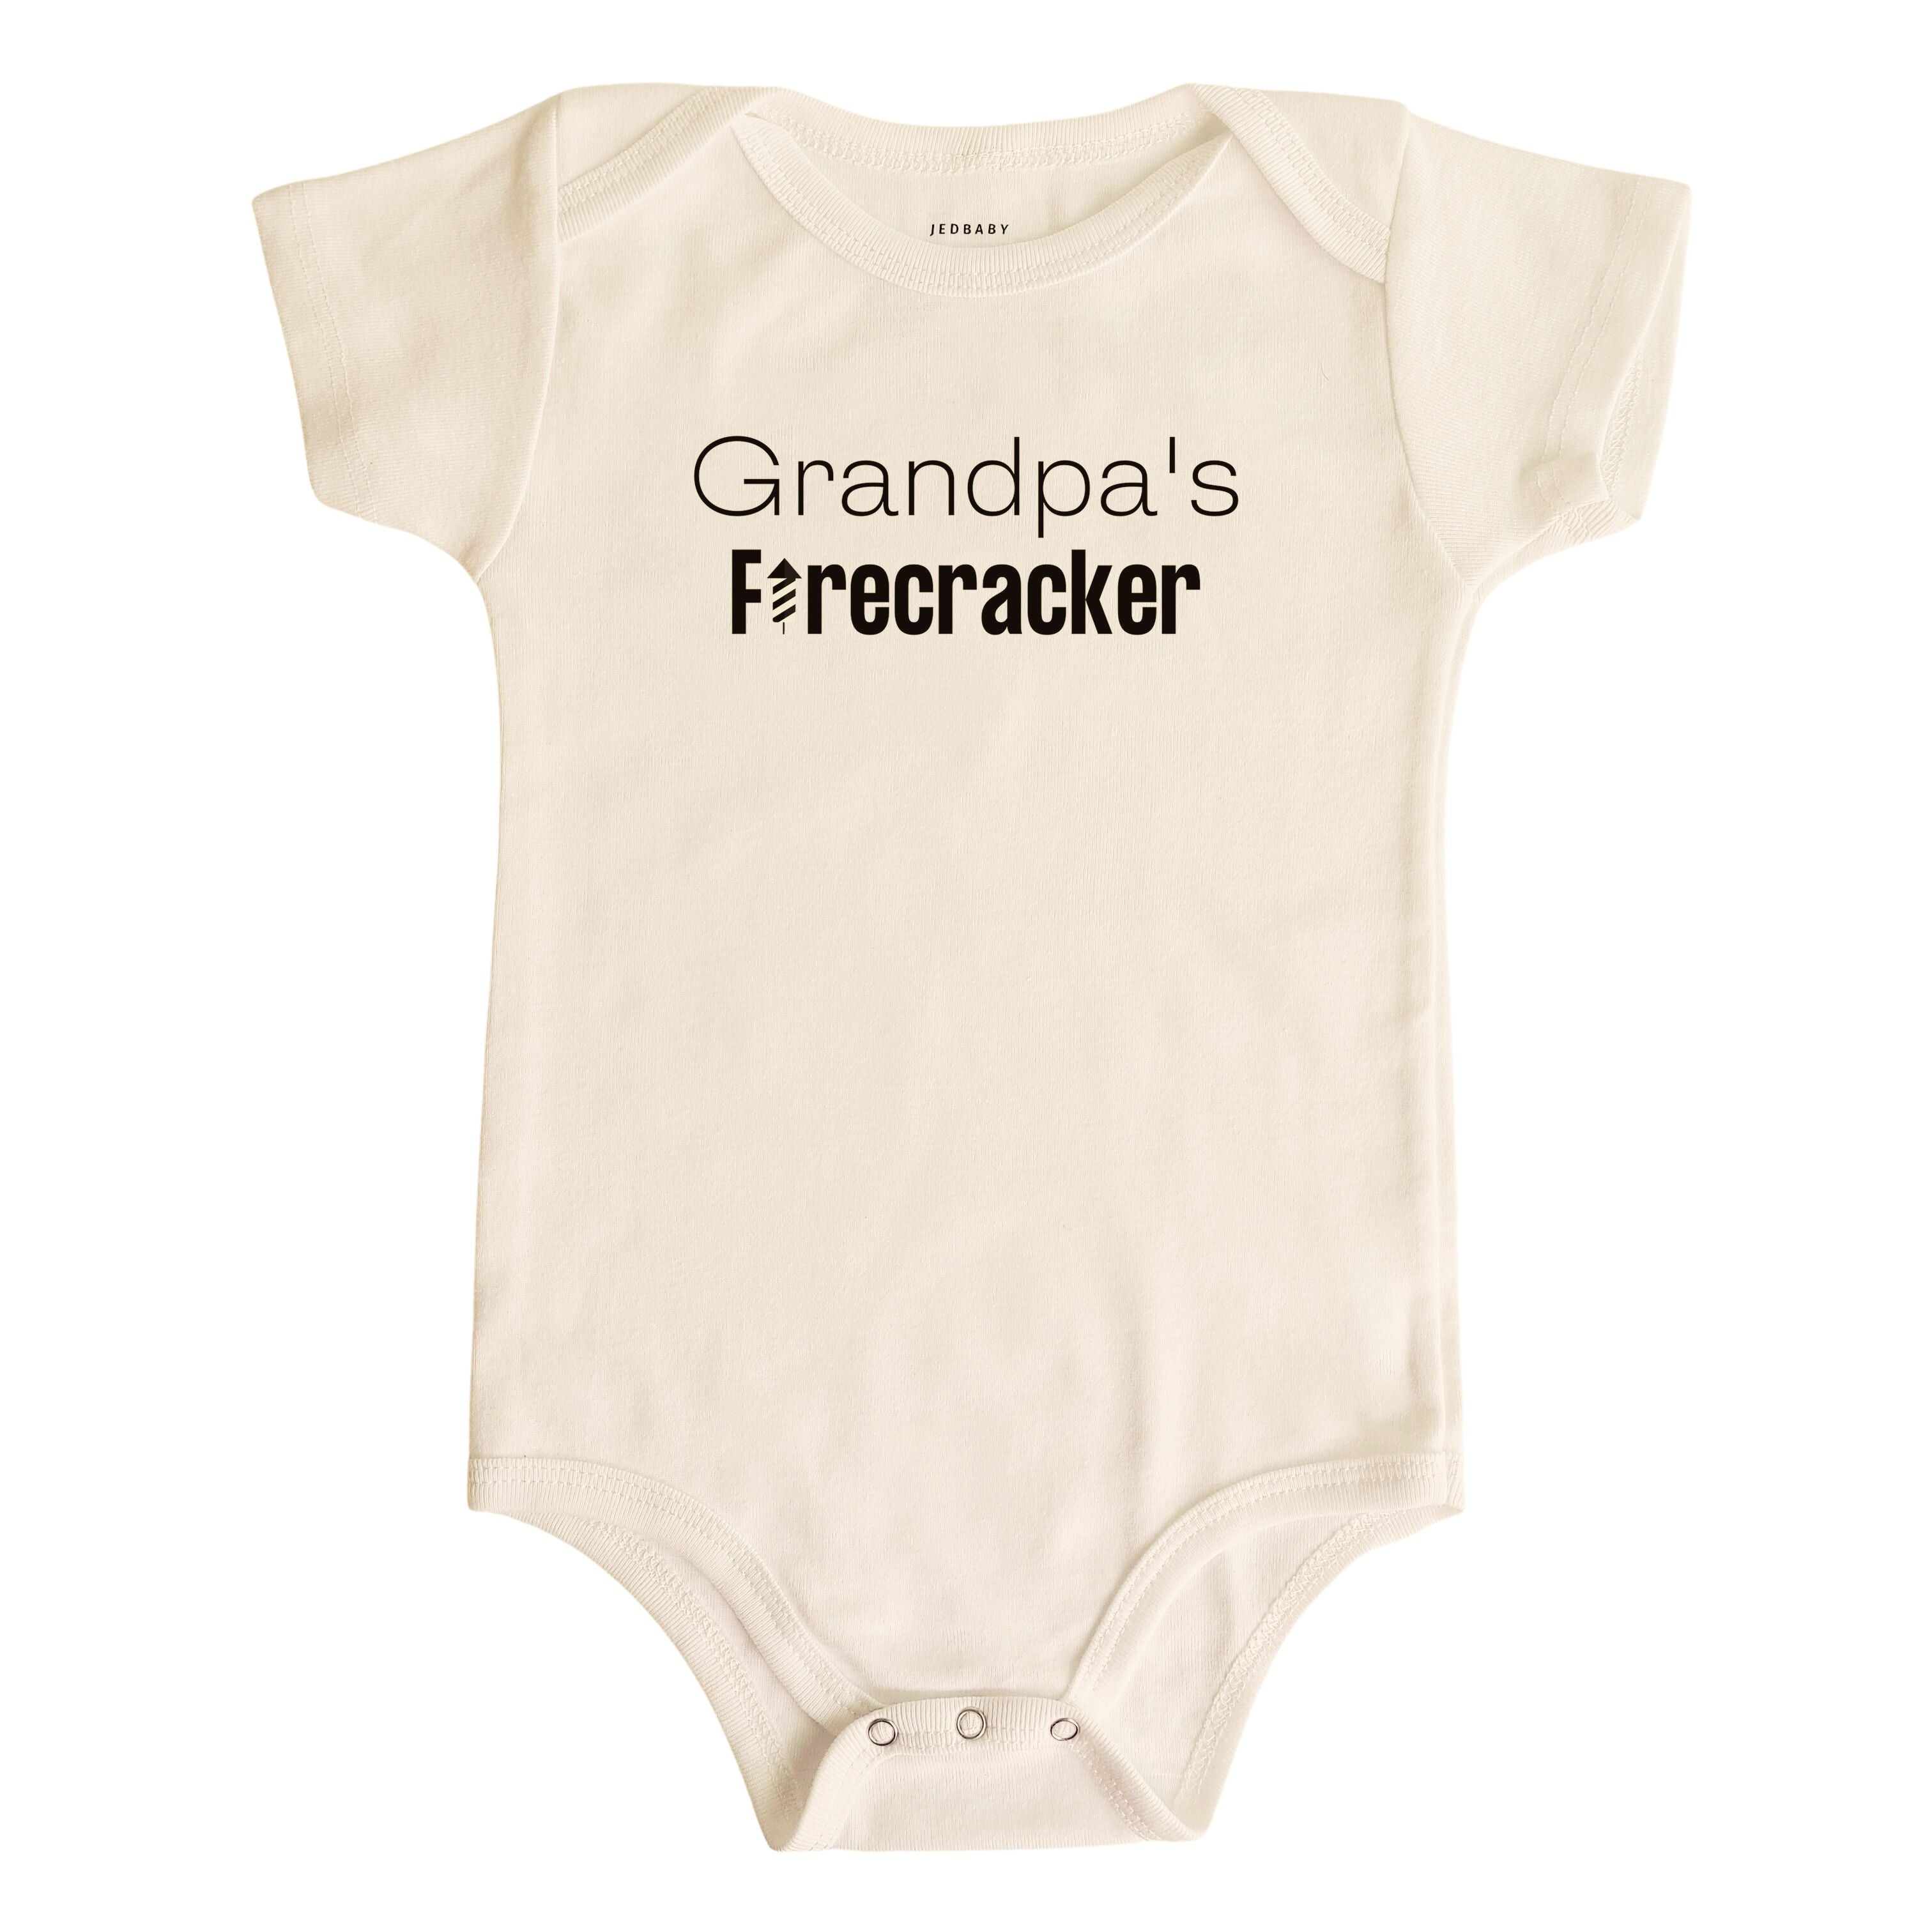 Jedbaby Grandpa's Firecracker Short Sleeve Baby Onesie Bodysuit